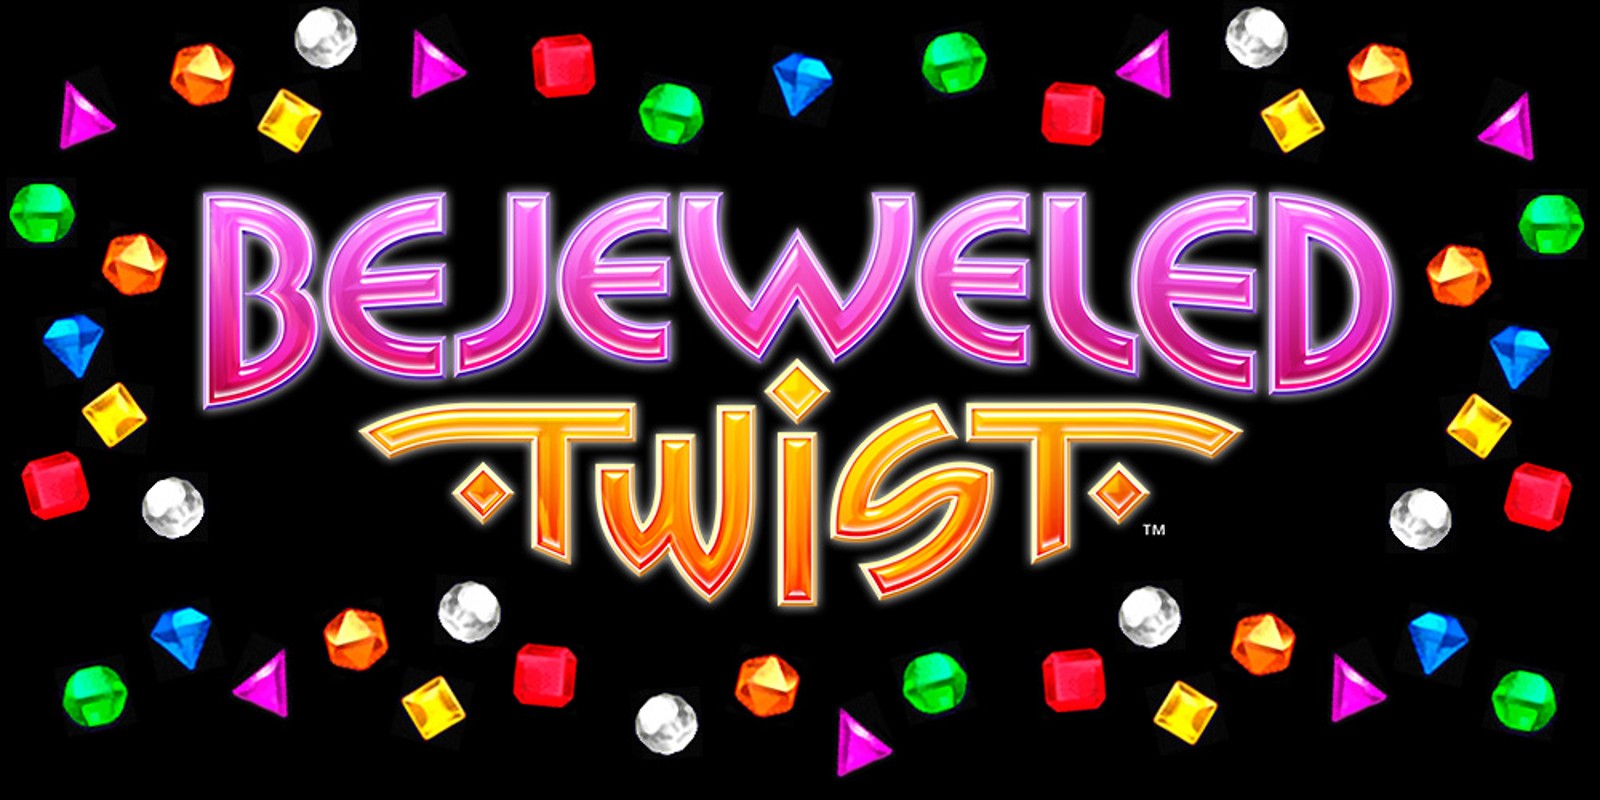 bejeweled twist game